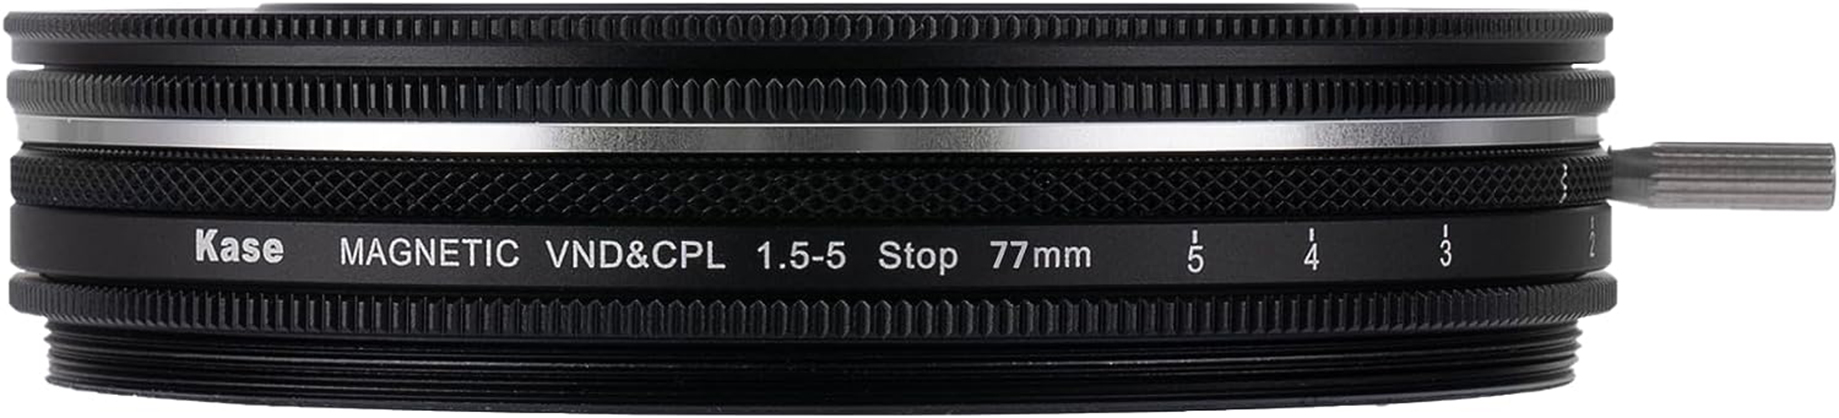 1021500_A.jpg - Kase Magnetic Circular Filter Video Kit 77mm VND-CPL 1.5-5 / Black Mist